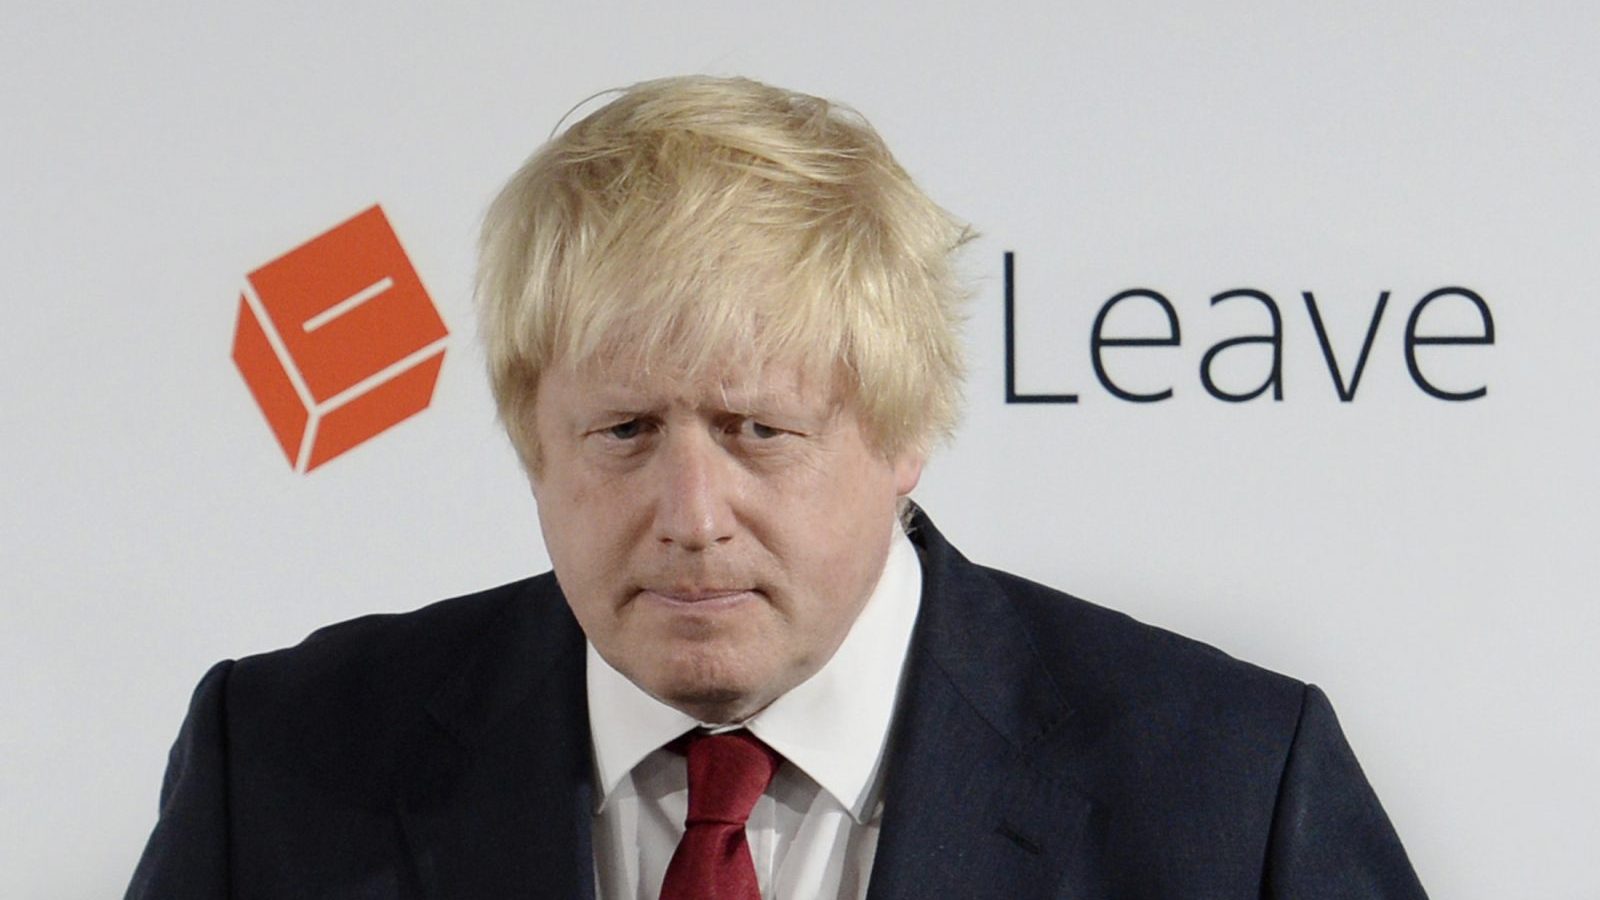 Vote Leave campaign leader Boris Johnson prepares to speak at the group's headquarters in London, Britain June 24, 2016.